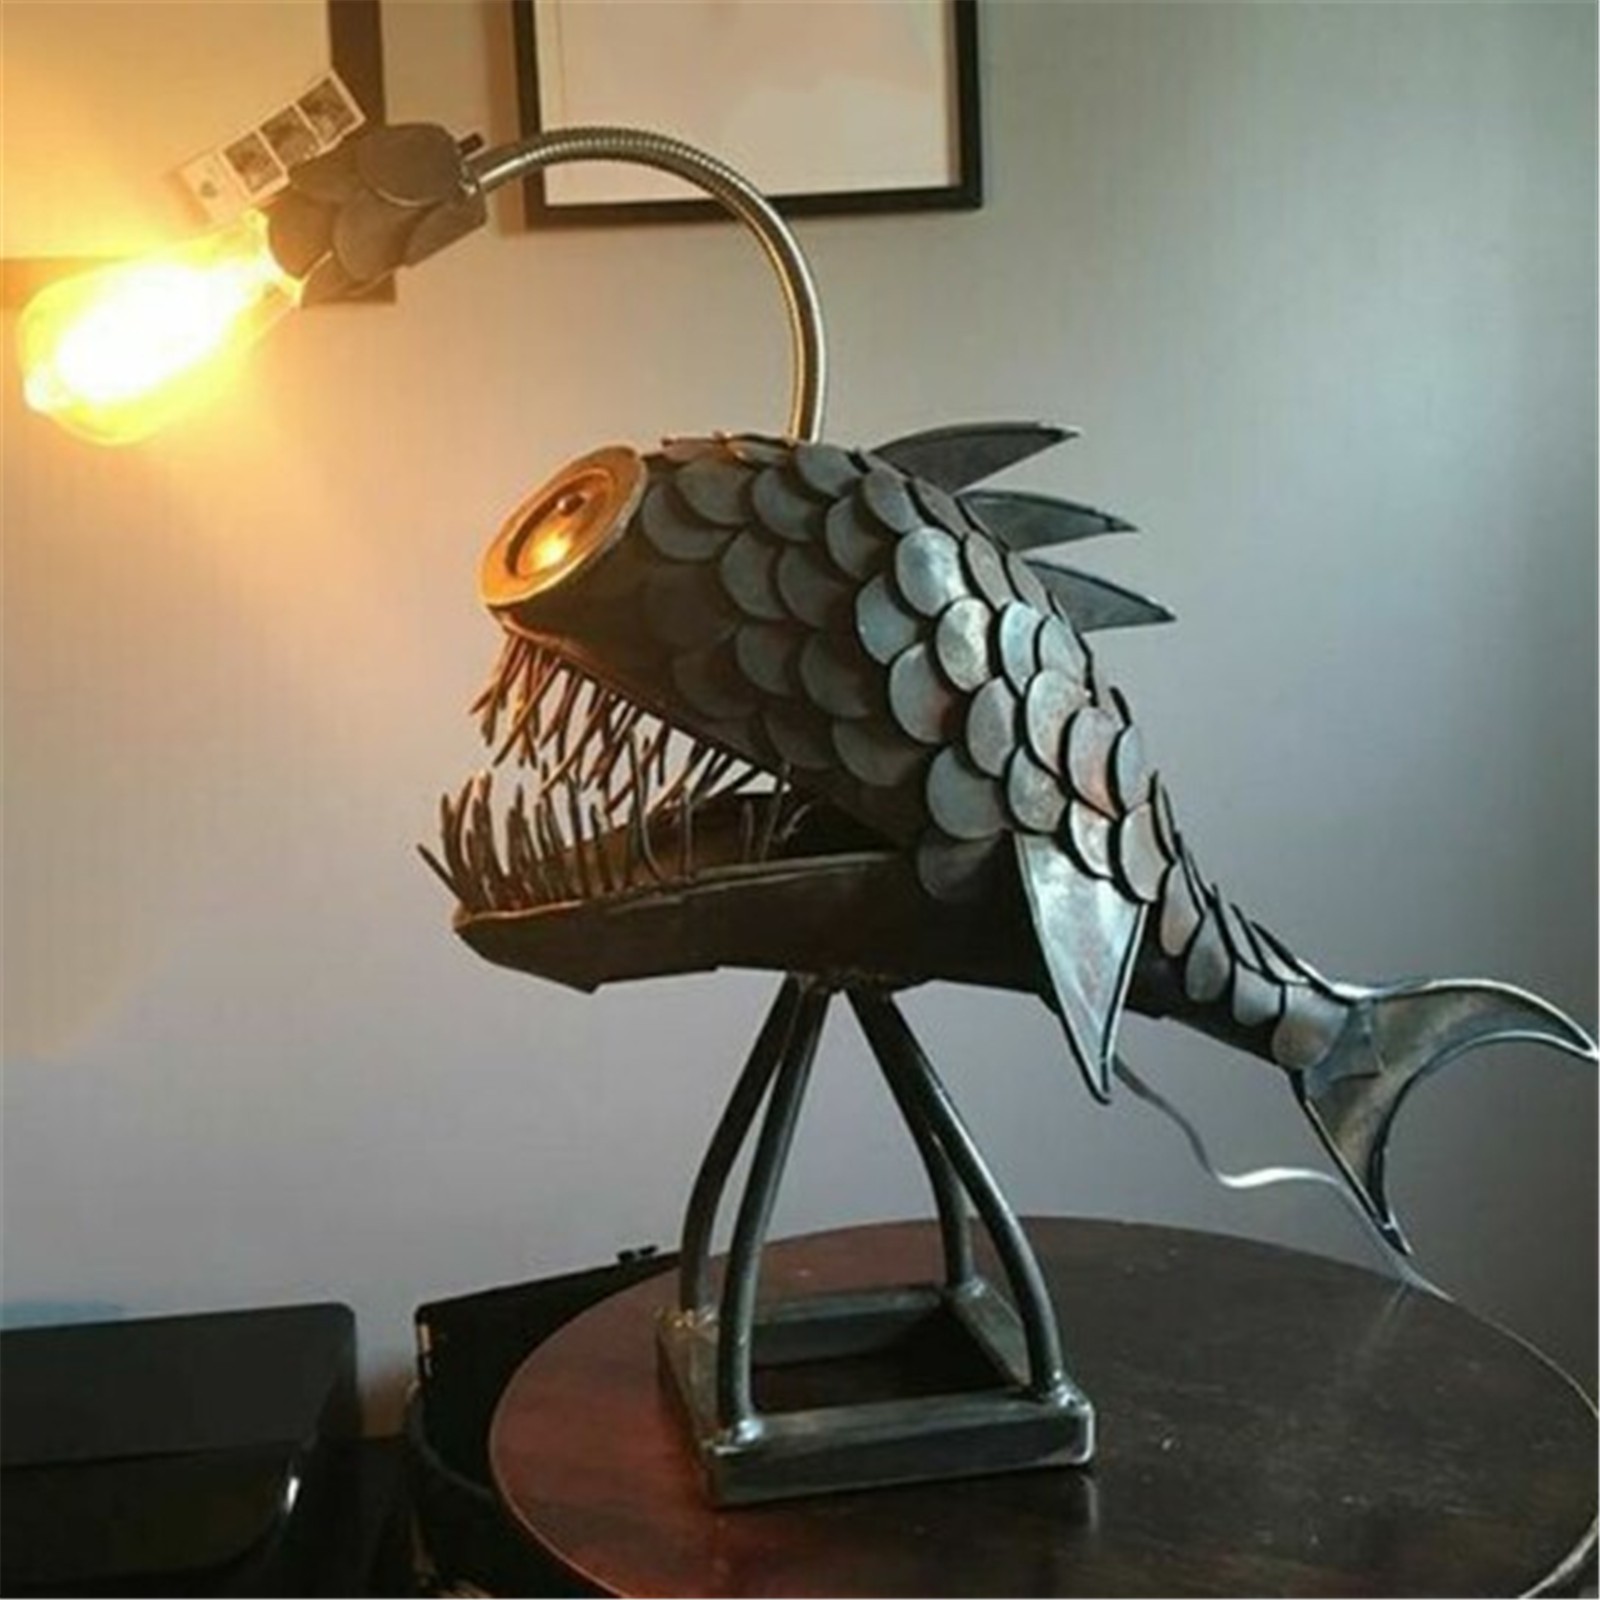 NEW USB Metal Art Lantern Table Decoration Bedroom Home Decoration Gift Creative Angler Fish Desk Lamp Shark Desktop Night Light